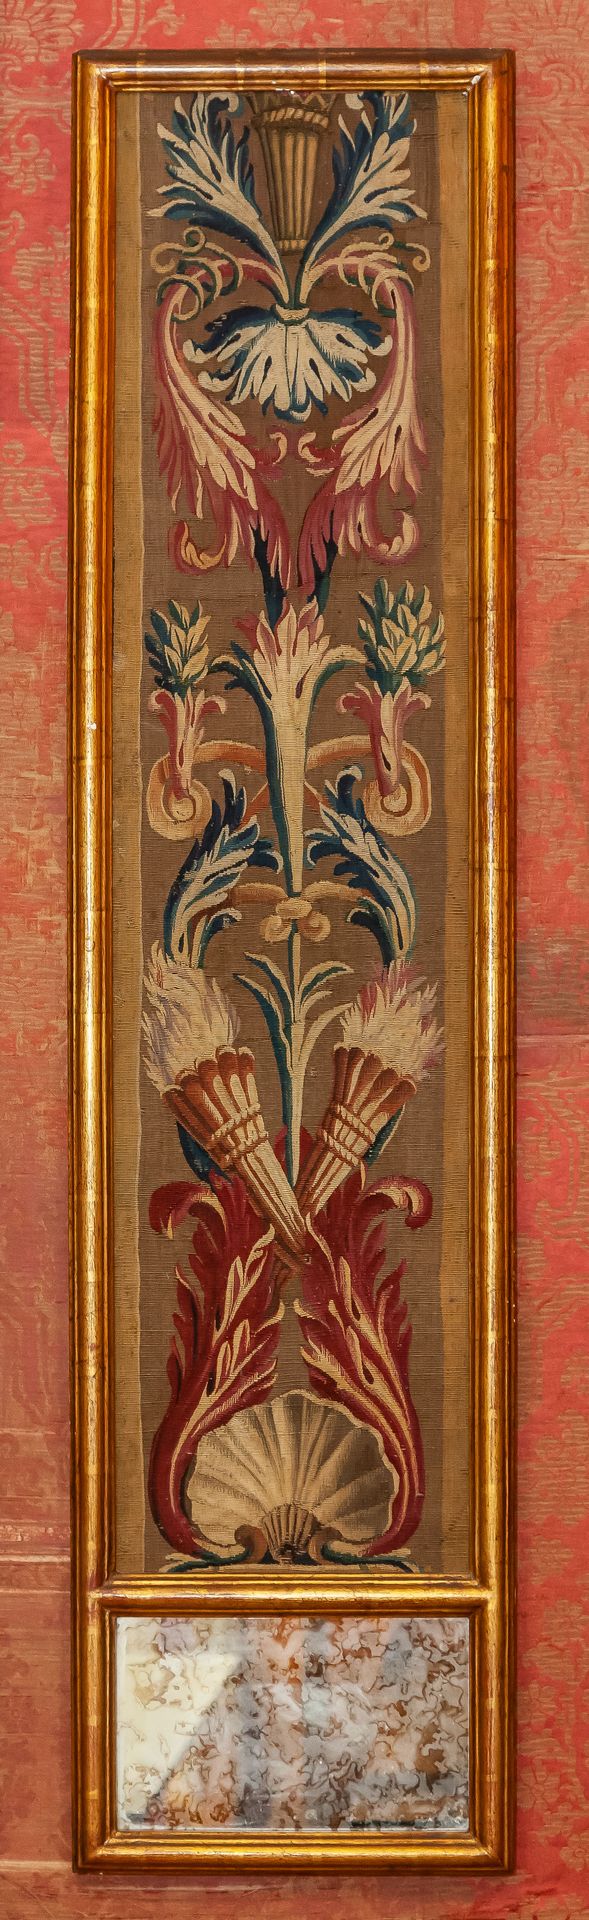 Null 一对由18世纪的挂毯边框制成的trumos。

145 x 55 cm

1.000 - 1.200 €